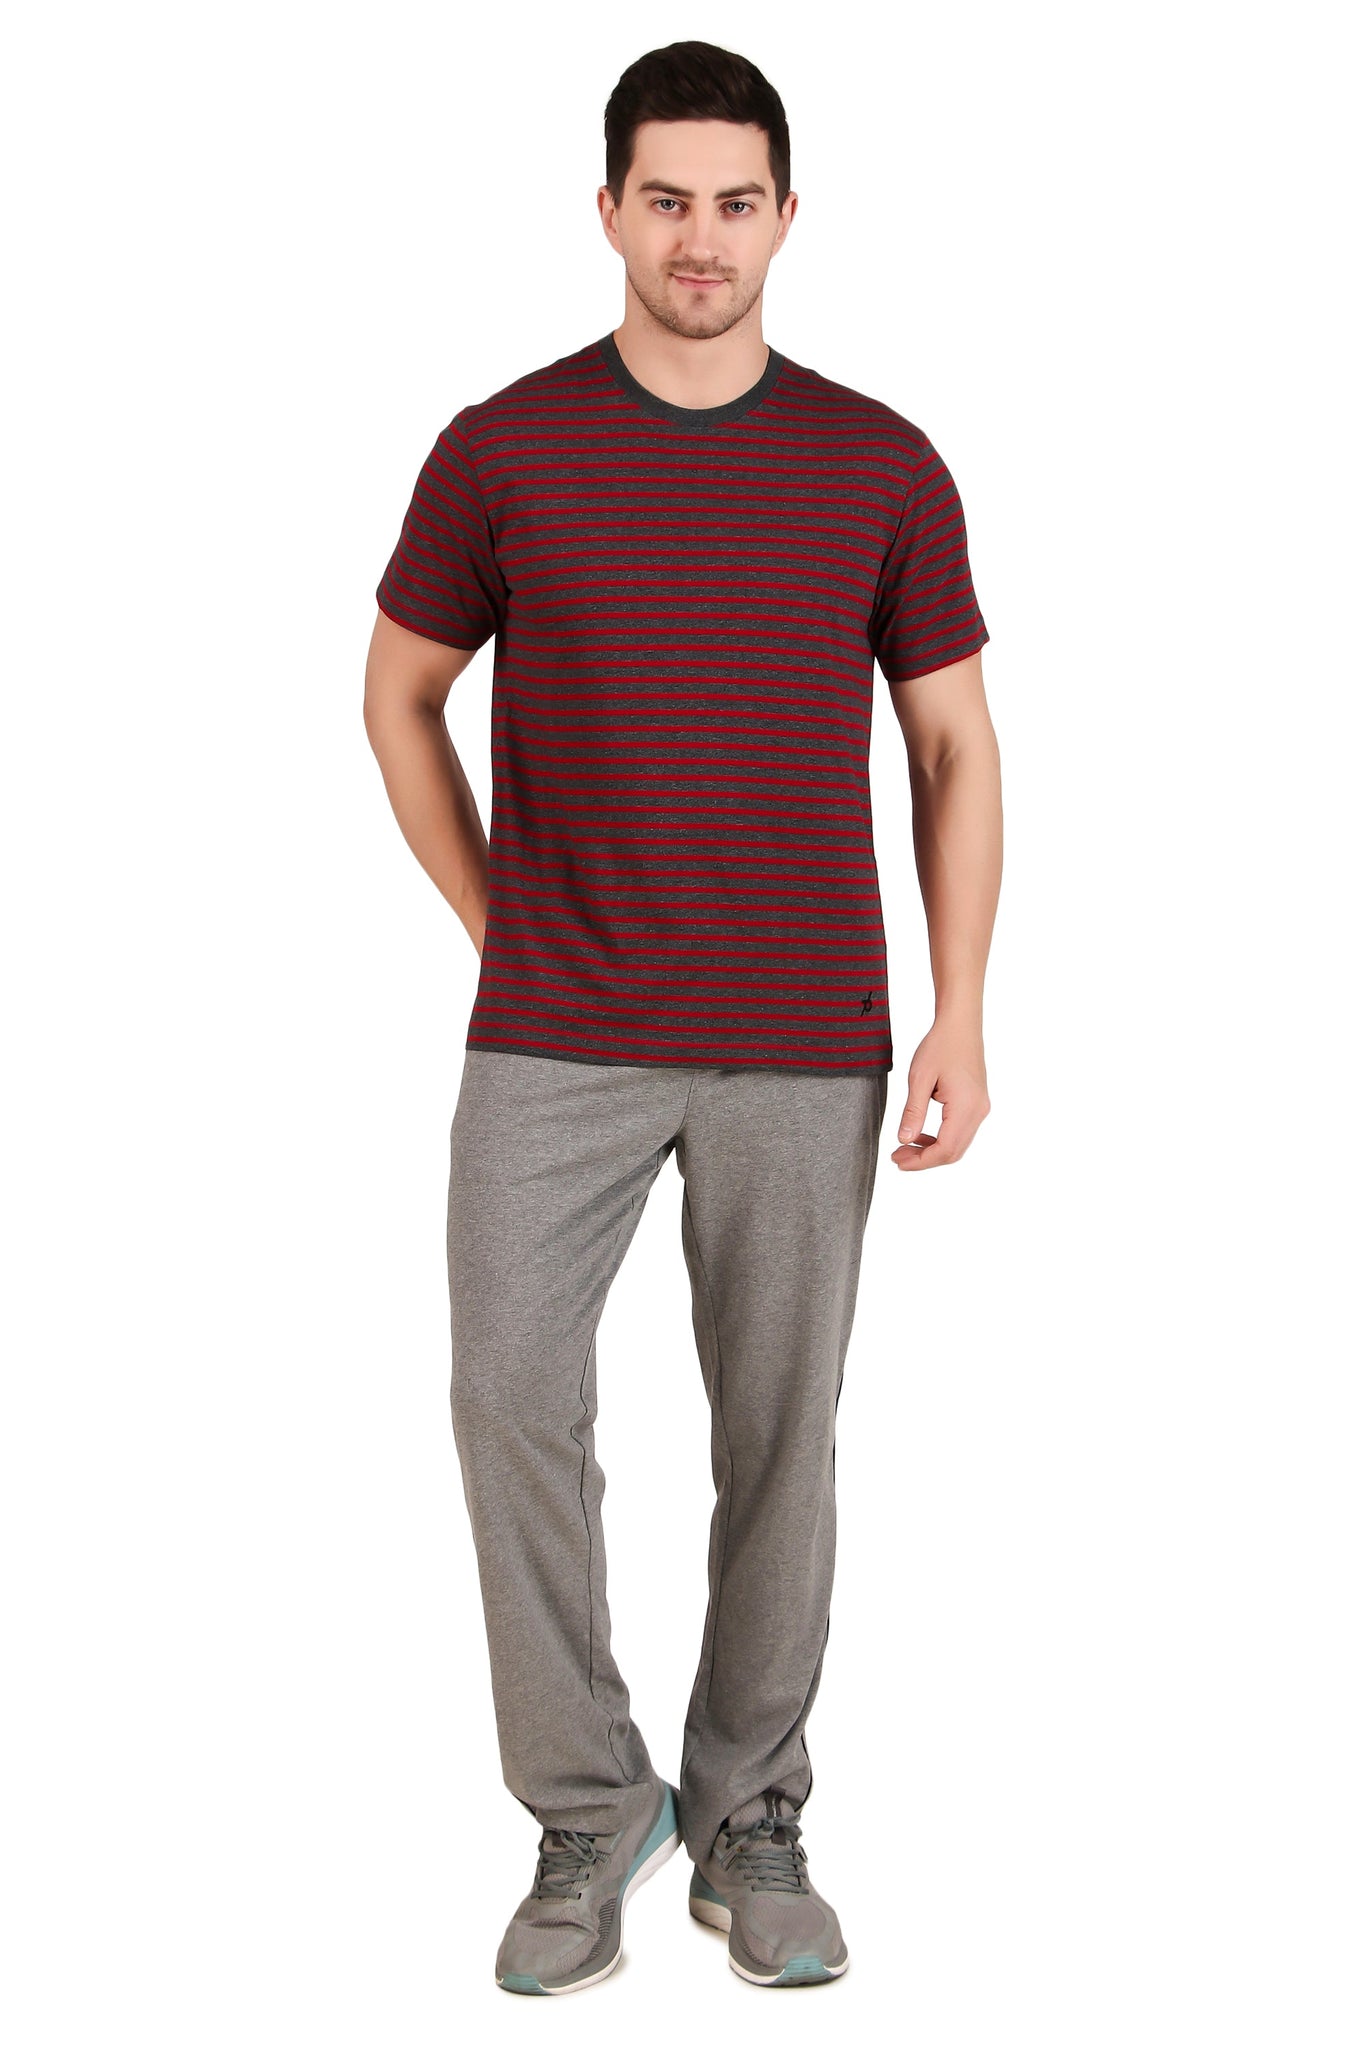 Jockey-2715 Super Combed Cotton Rich Striped Round Neck Half Sleeve T-Shirt